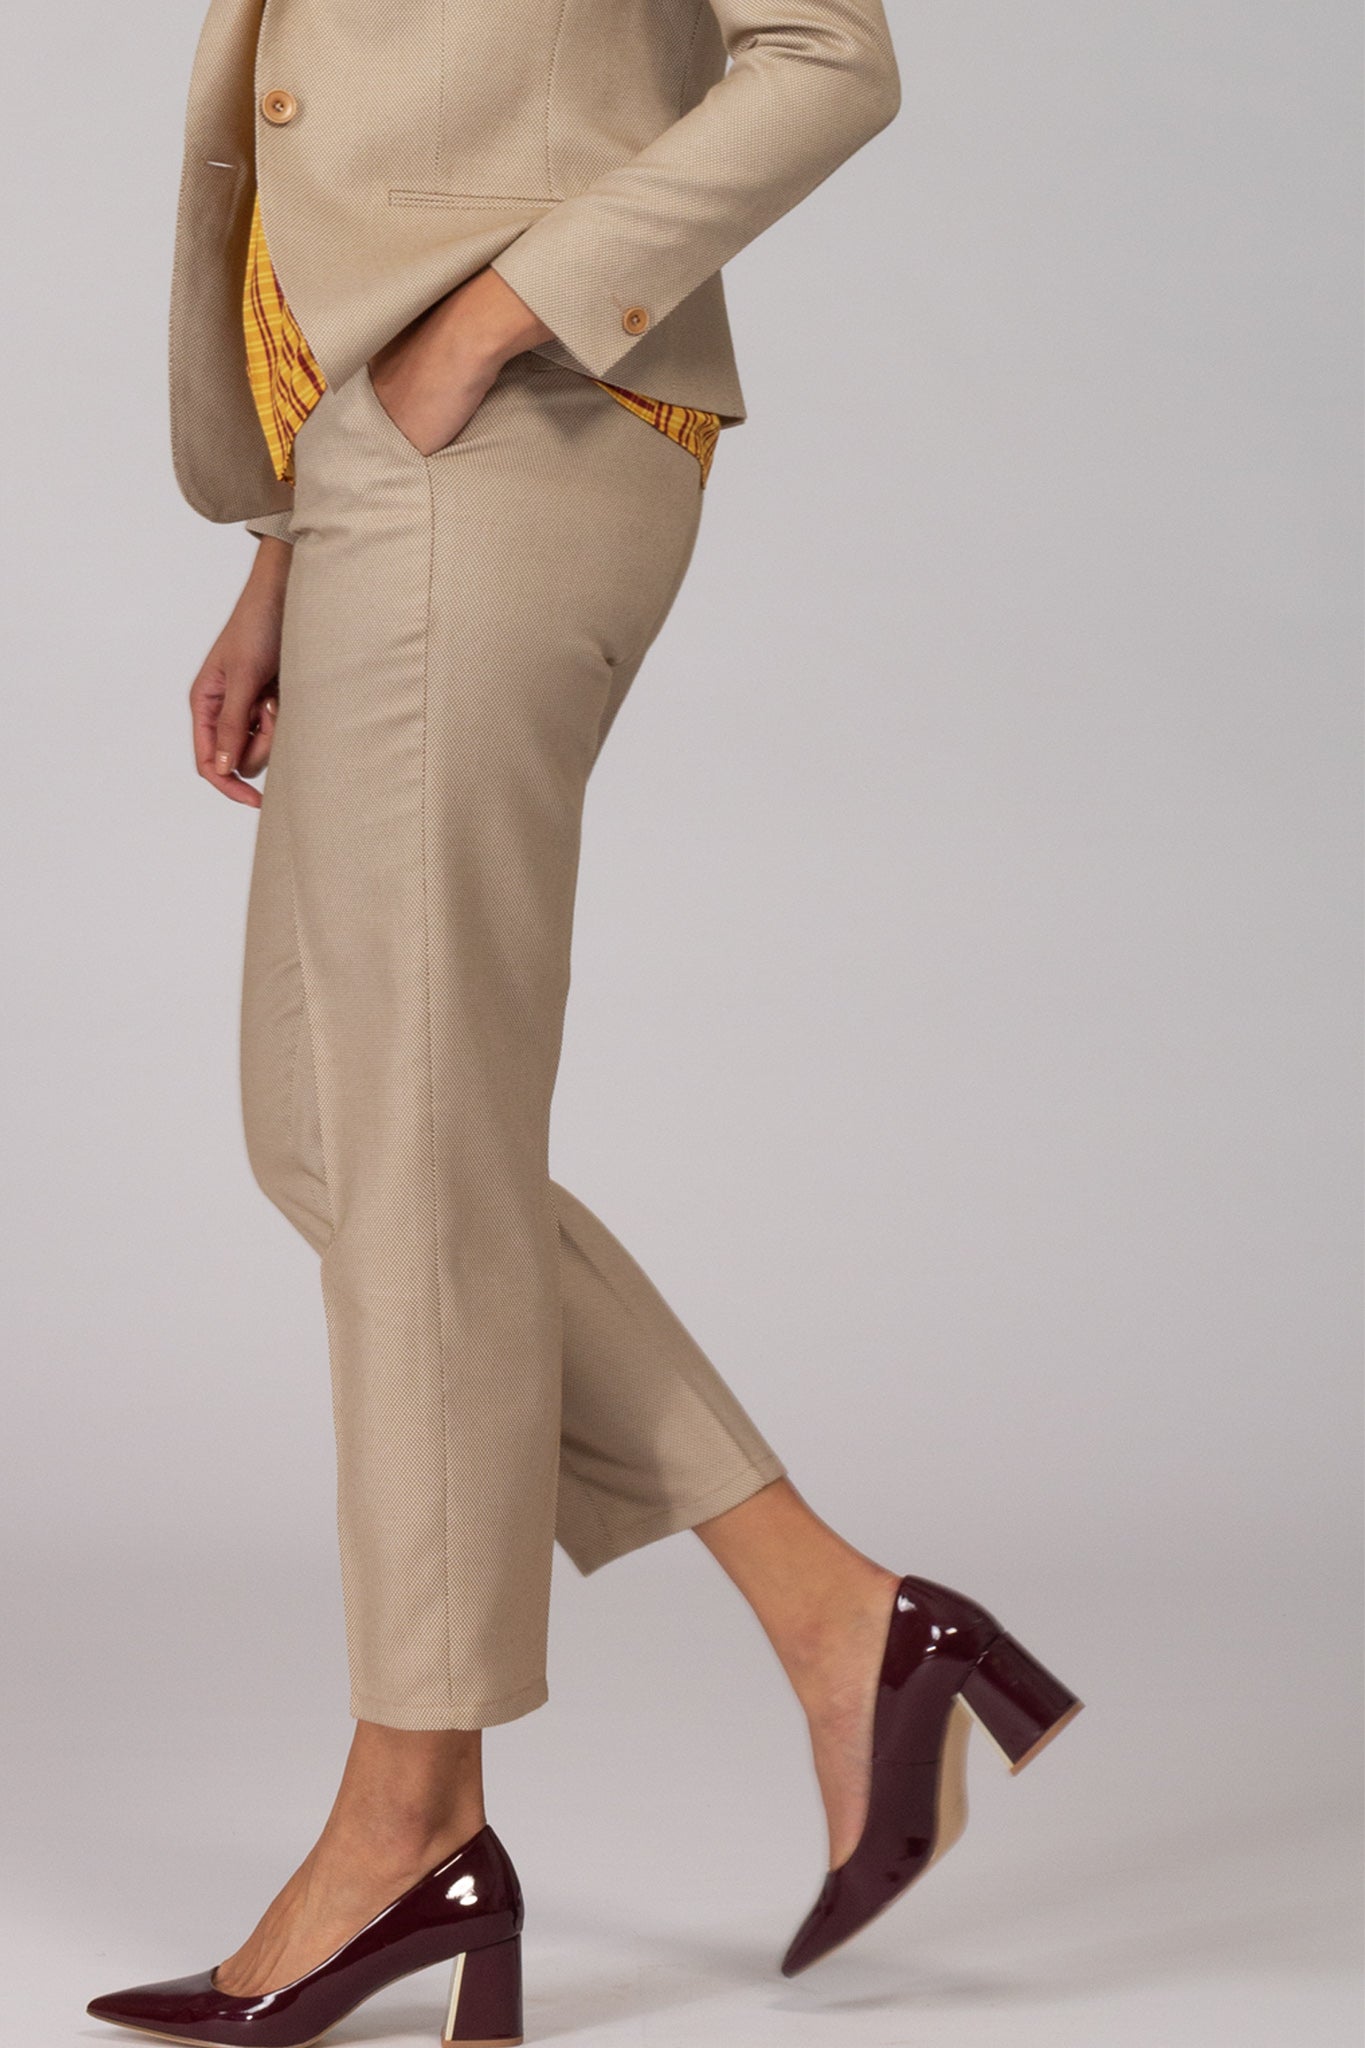 Buy Khaki Formal Trousers For Men Online  Best Prices in India  UNIFORM  BUCKET